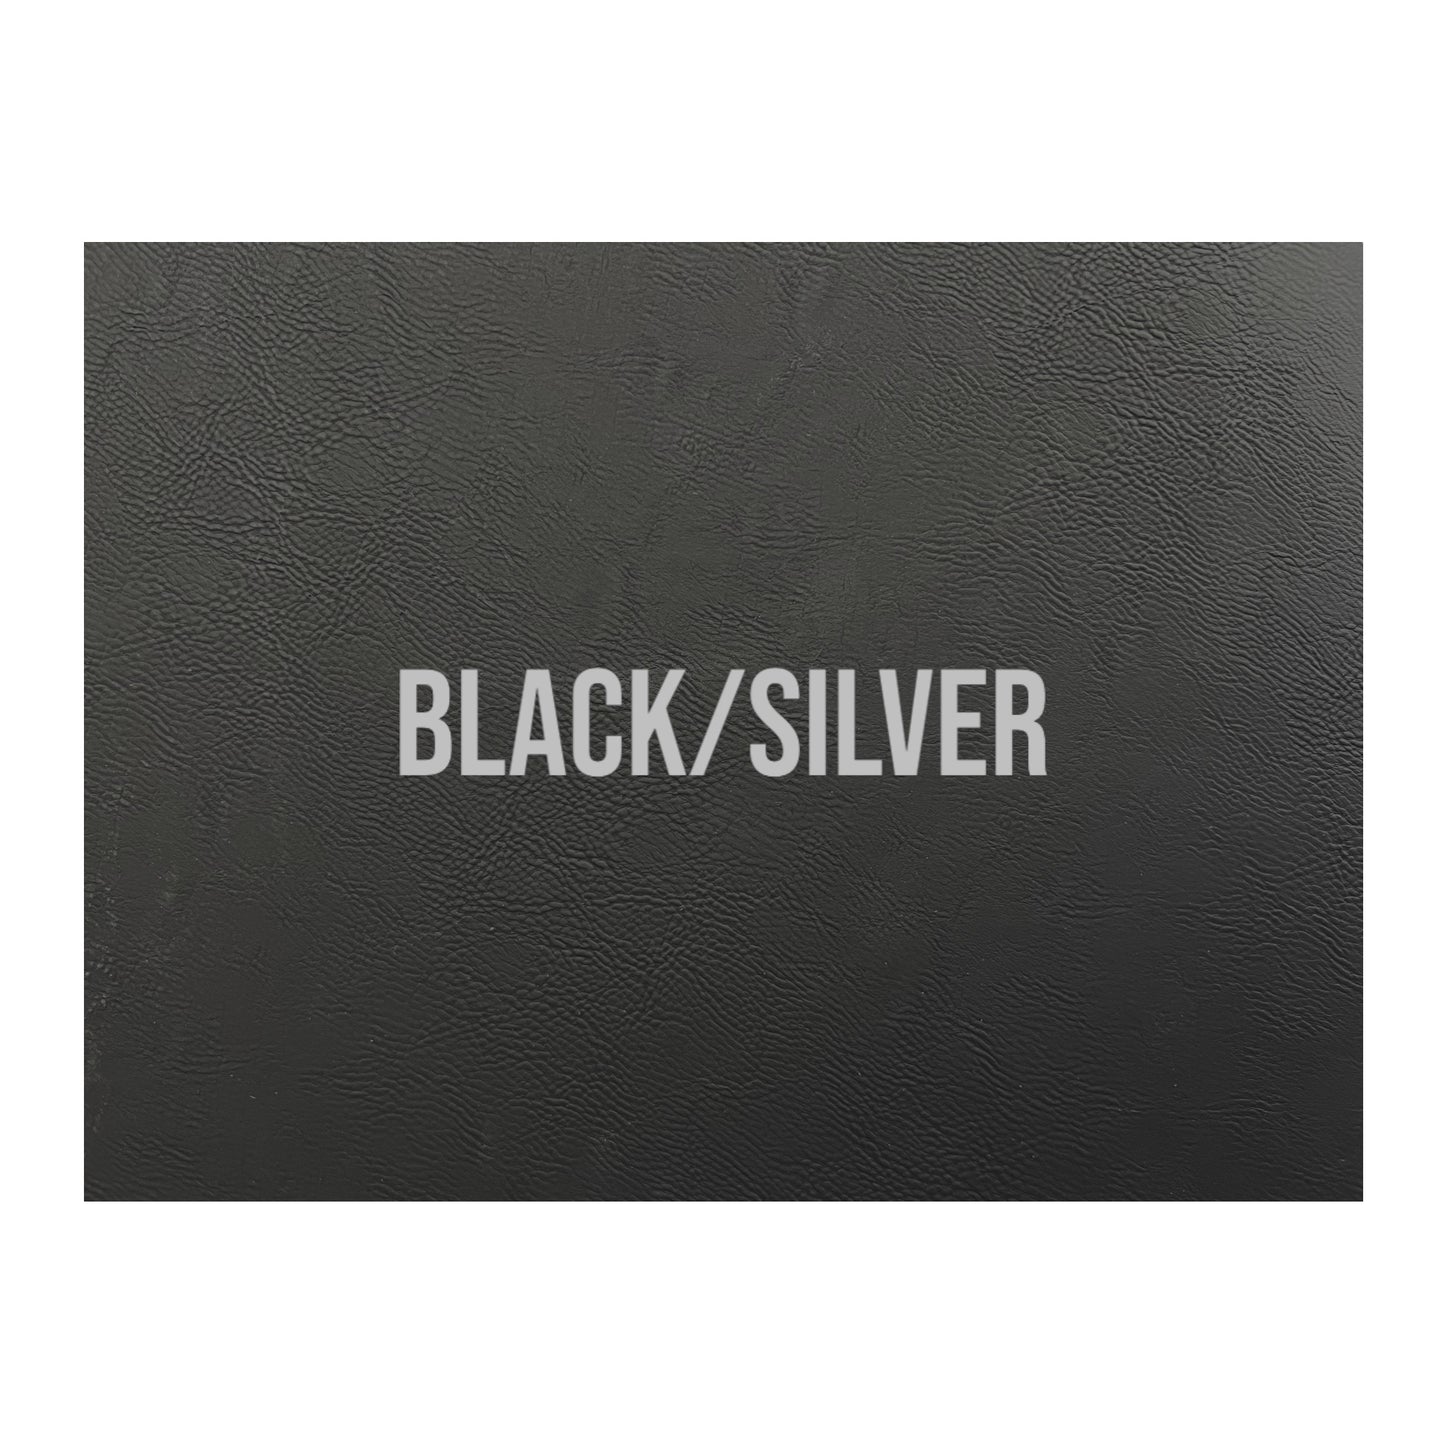 BLACK/SILVER HYDBOND LEATHERETTE SHEET (12"x24")